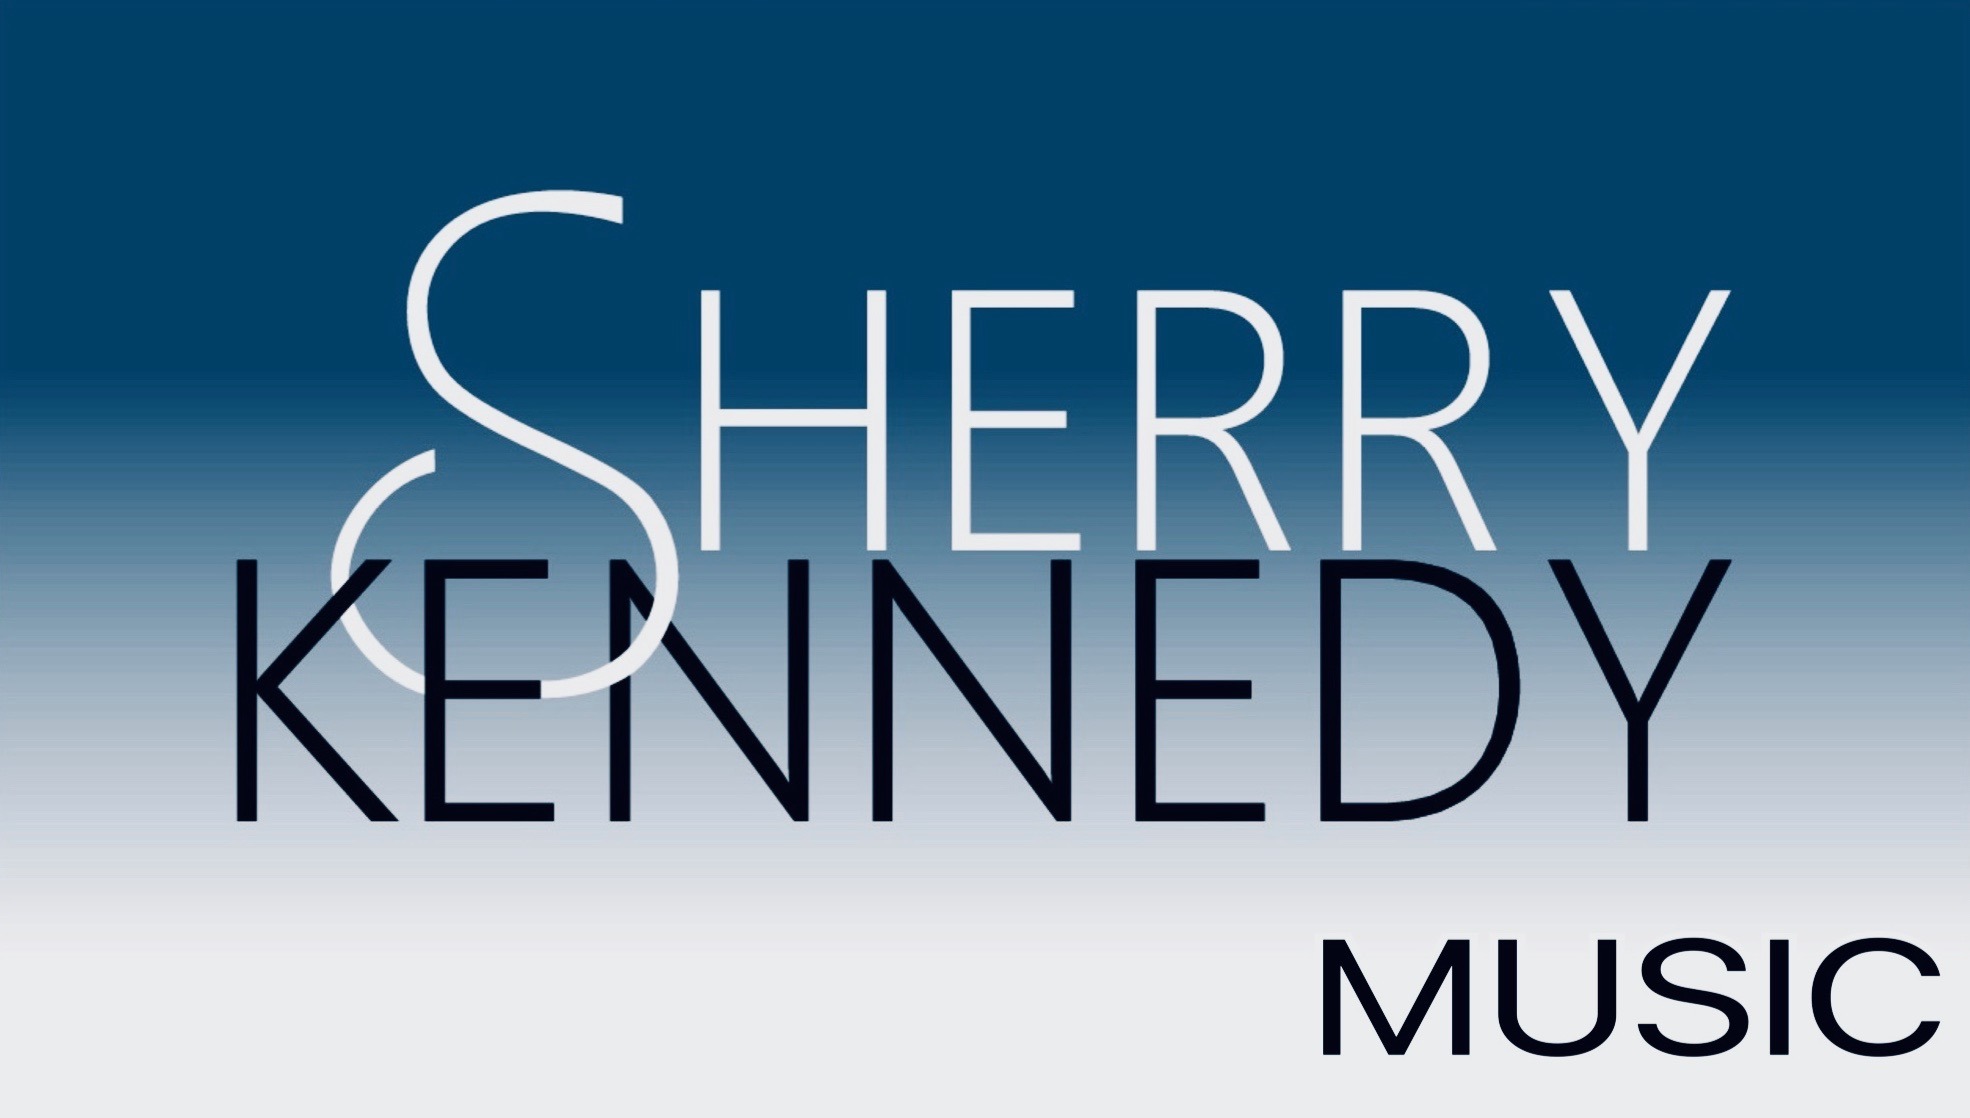 Sherry Kennedy Music